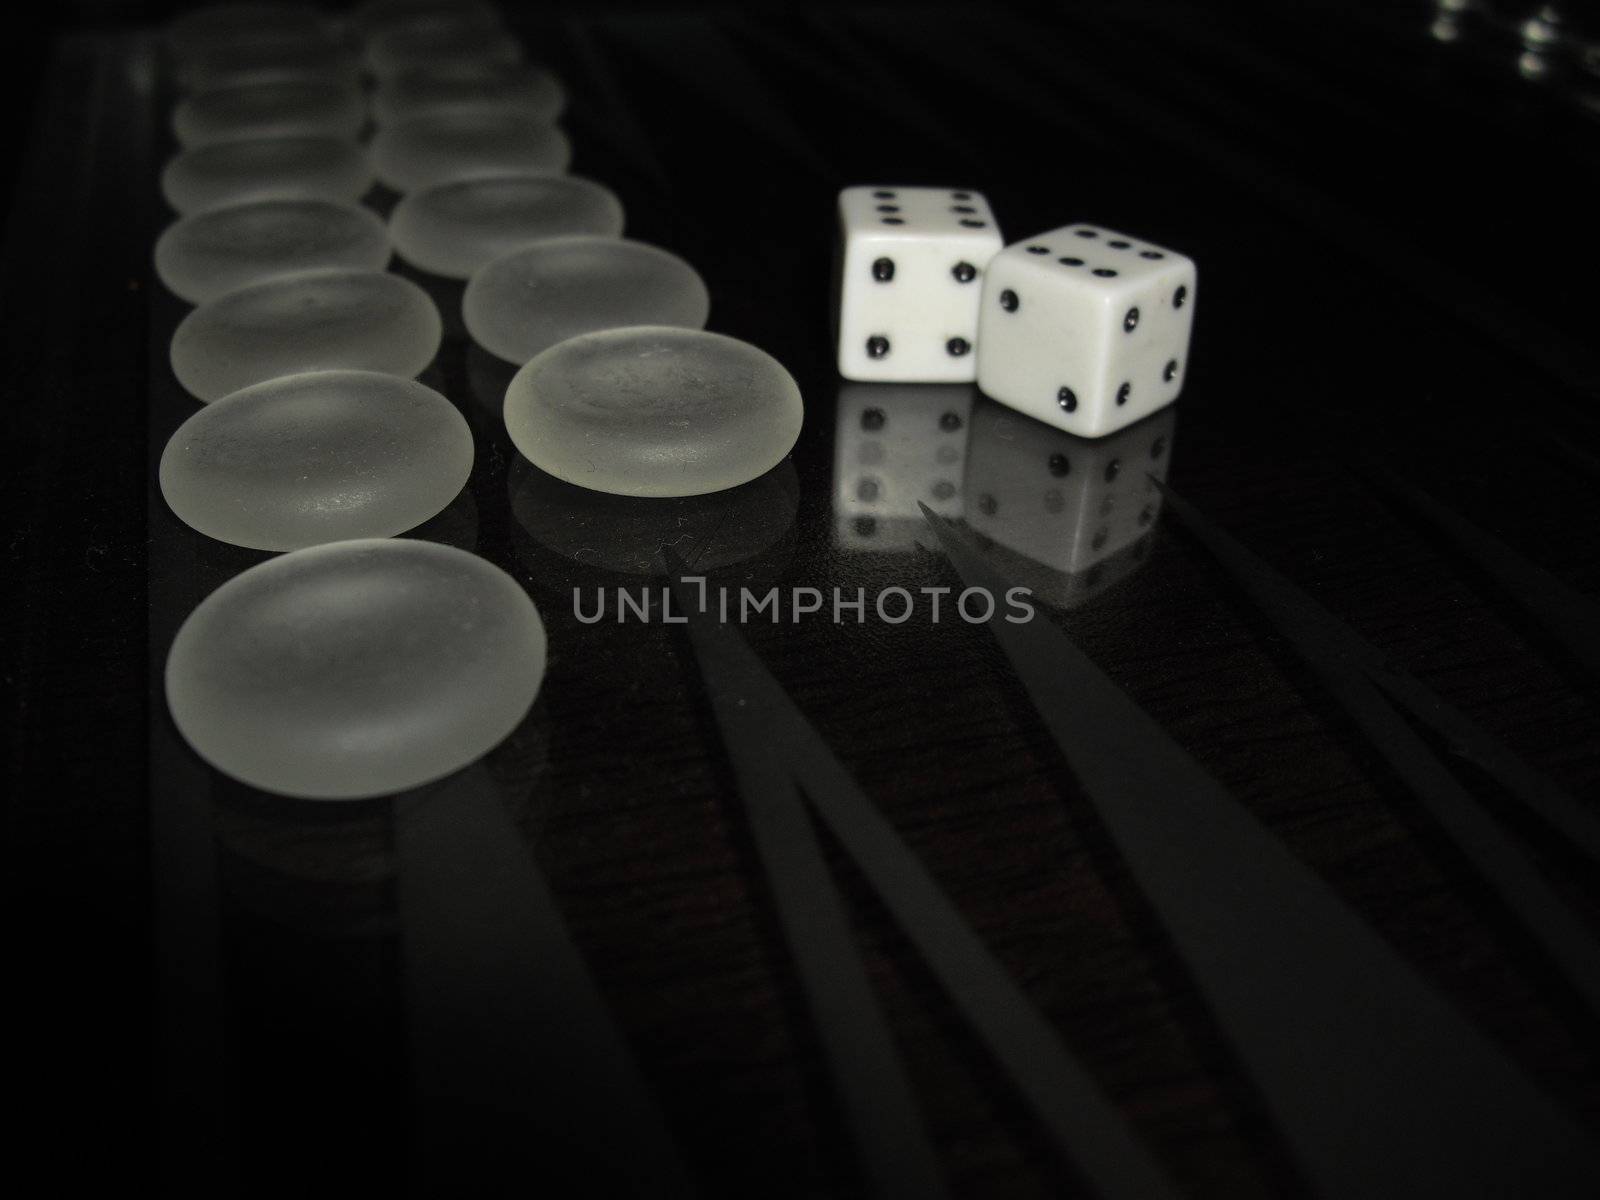 backgammon game